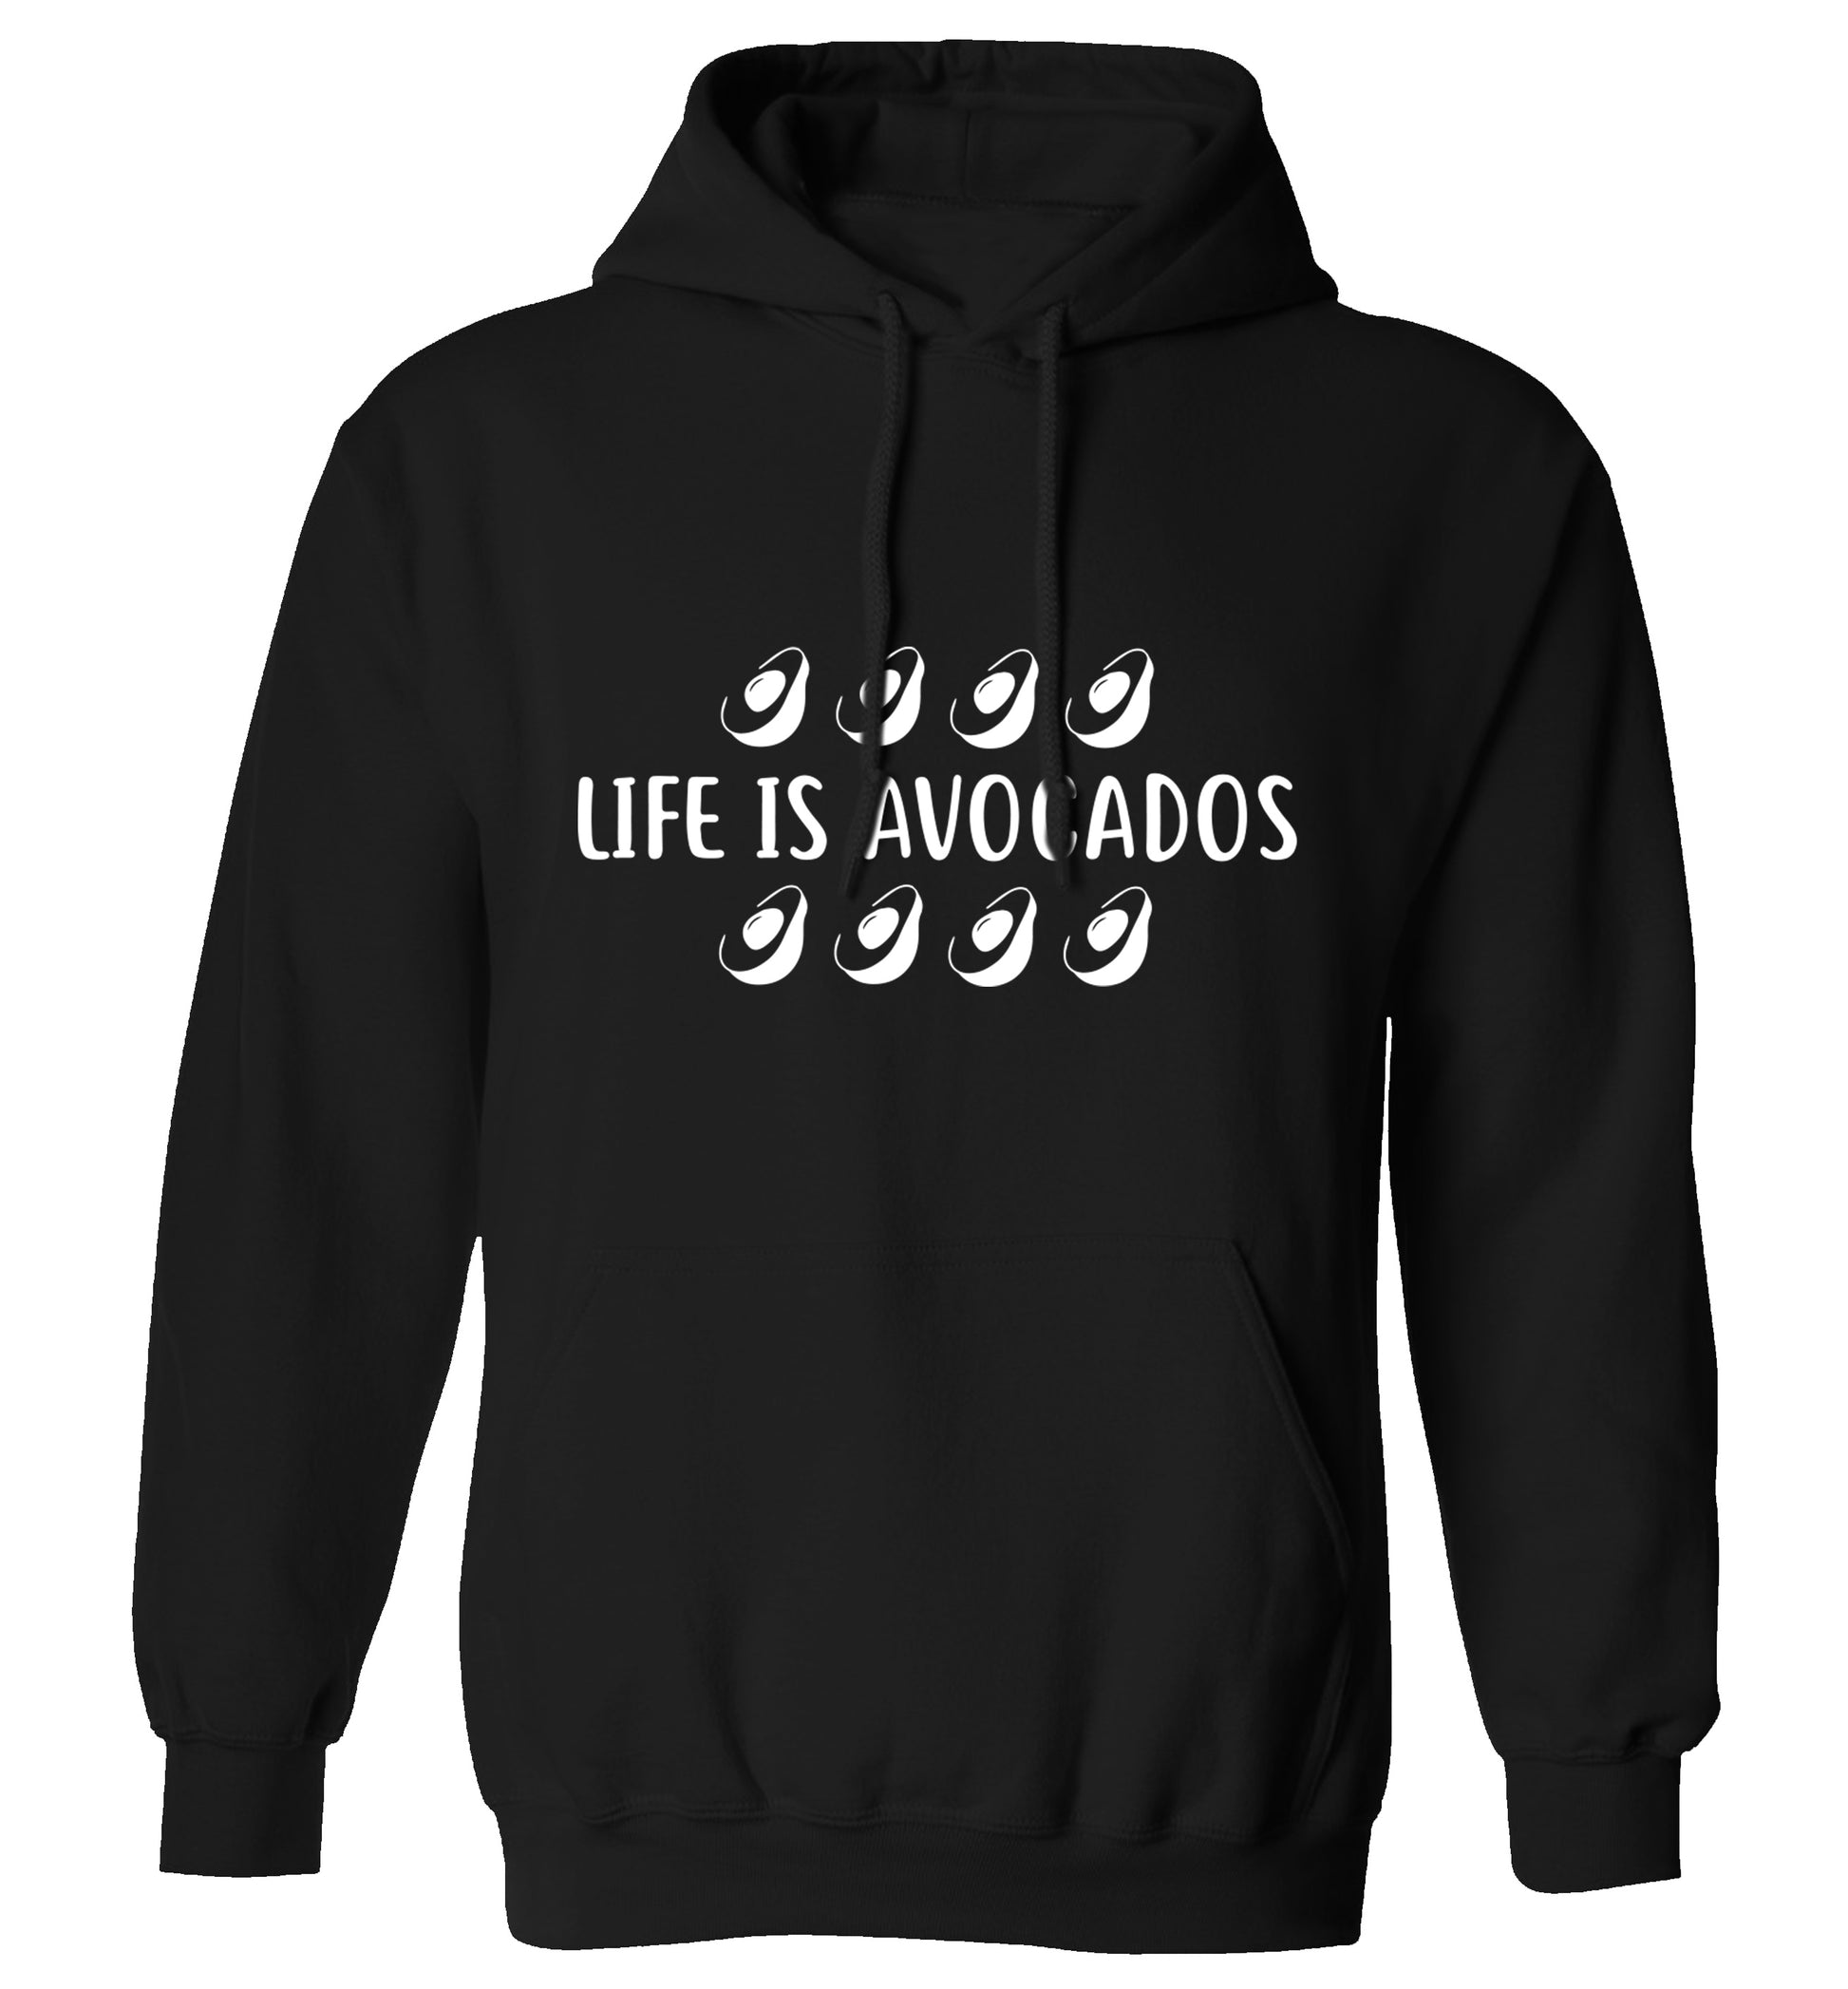 Life is avocados adults unisex black hoodie 2XL